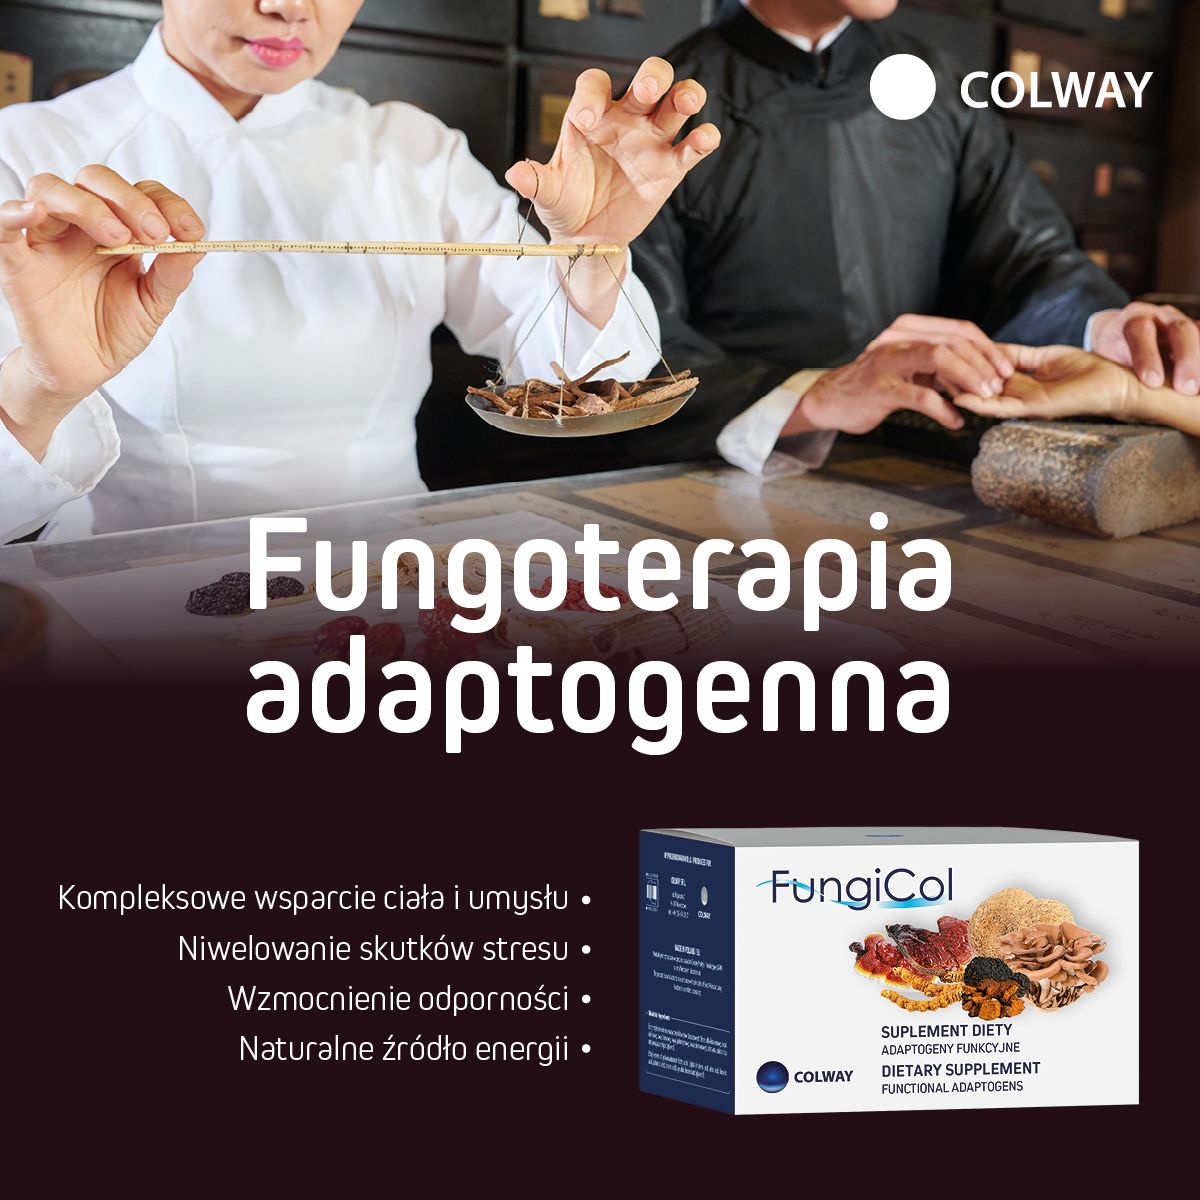 Colway FungiCol Fungoterapia adaptogenna Kordyceps Ganoderma Reishi